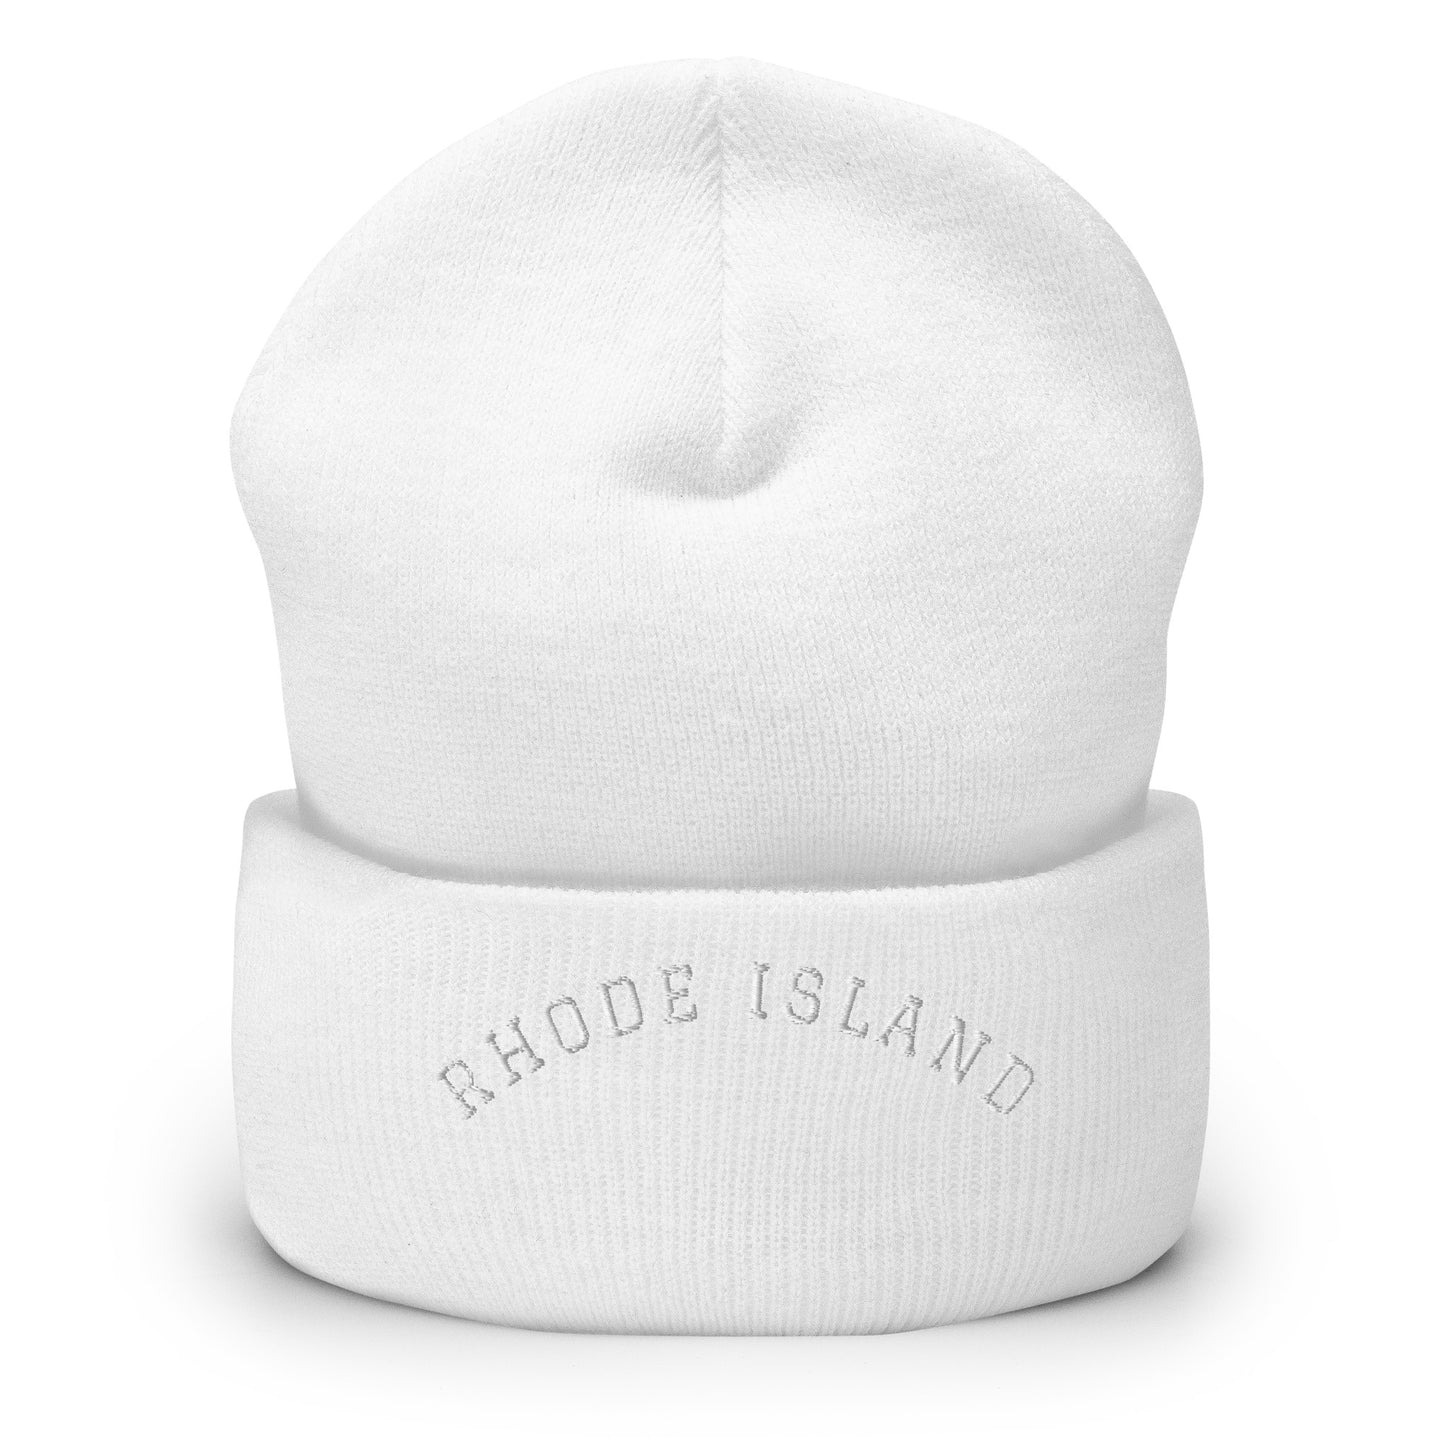 Rhode Island Arch Cuffed Beanie Hat